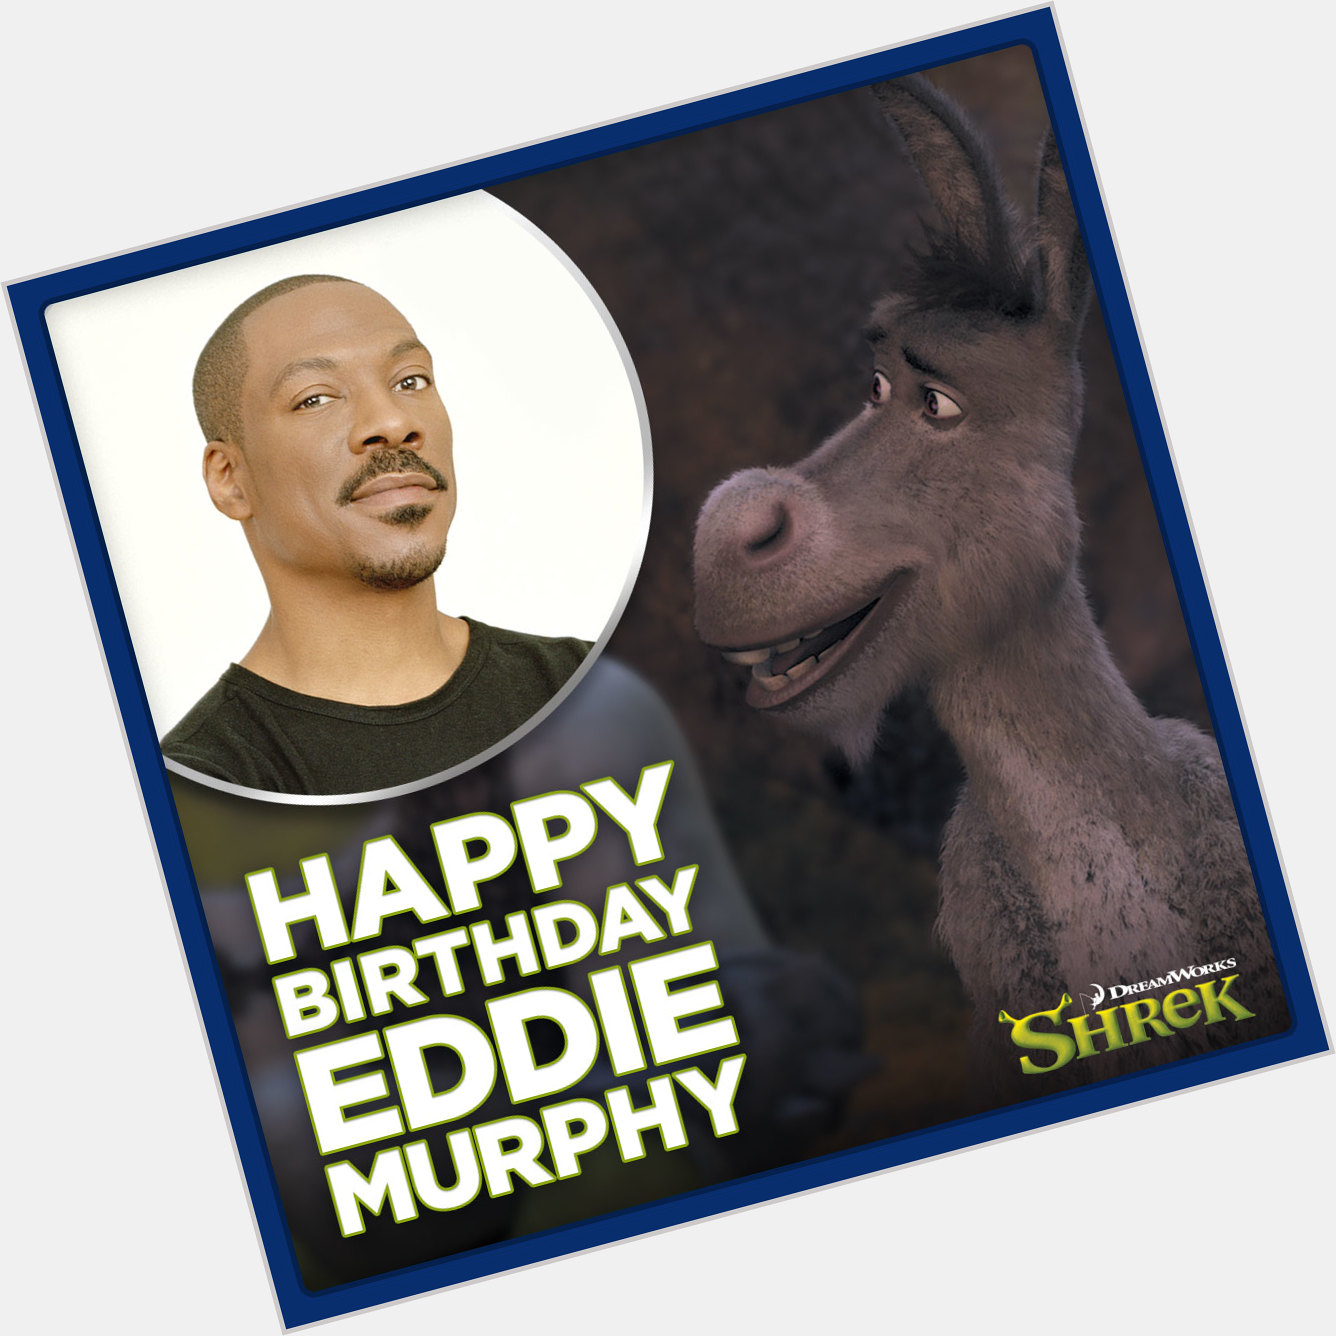 Wishing Eddie Murphy a really really happy birthday! 